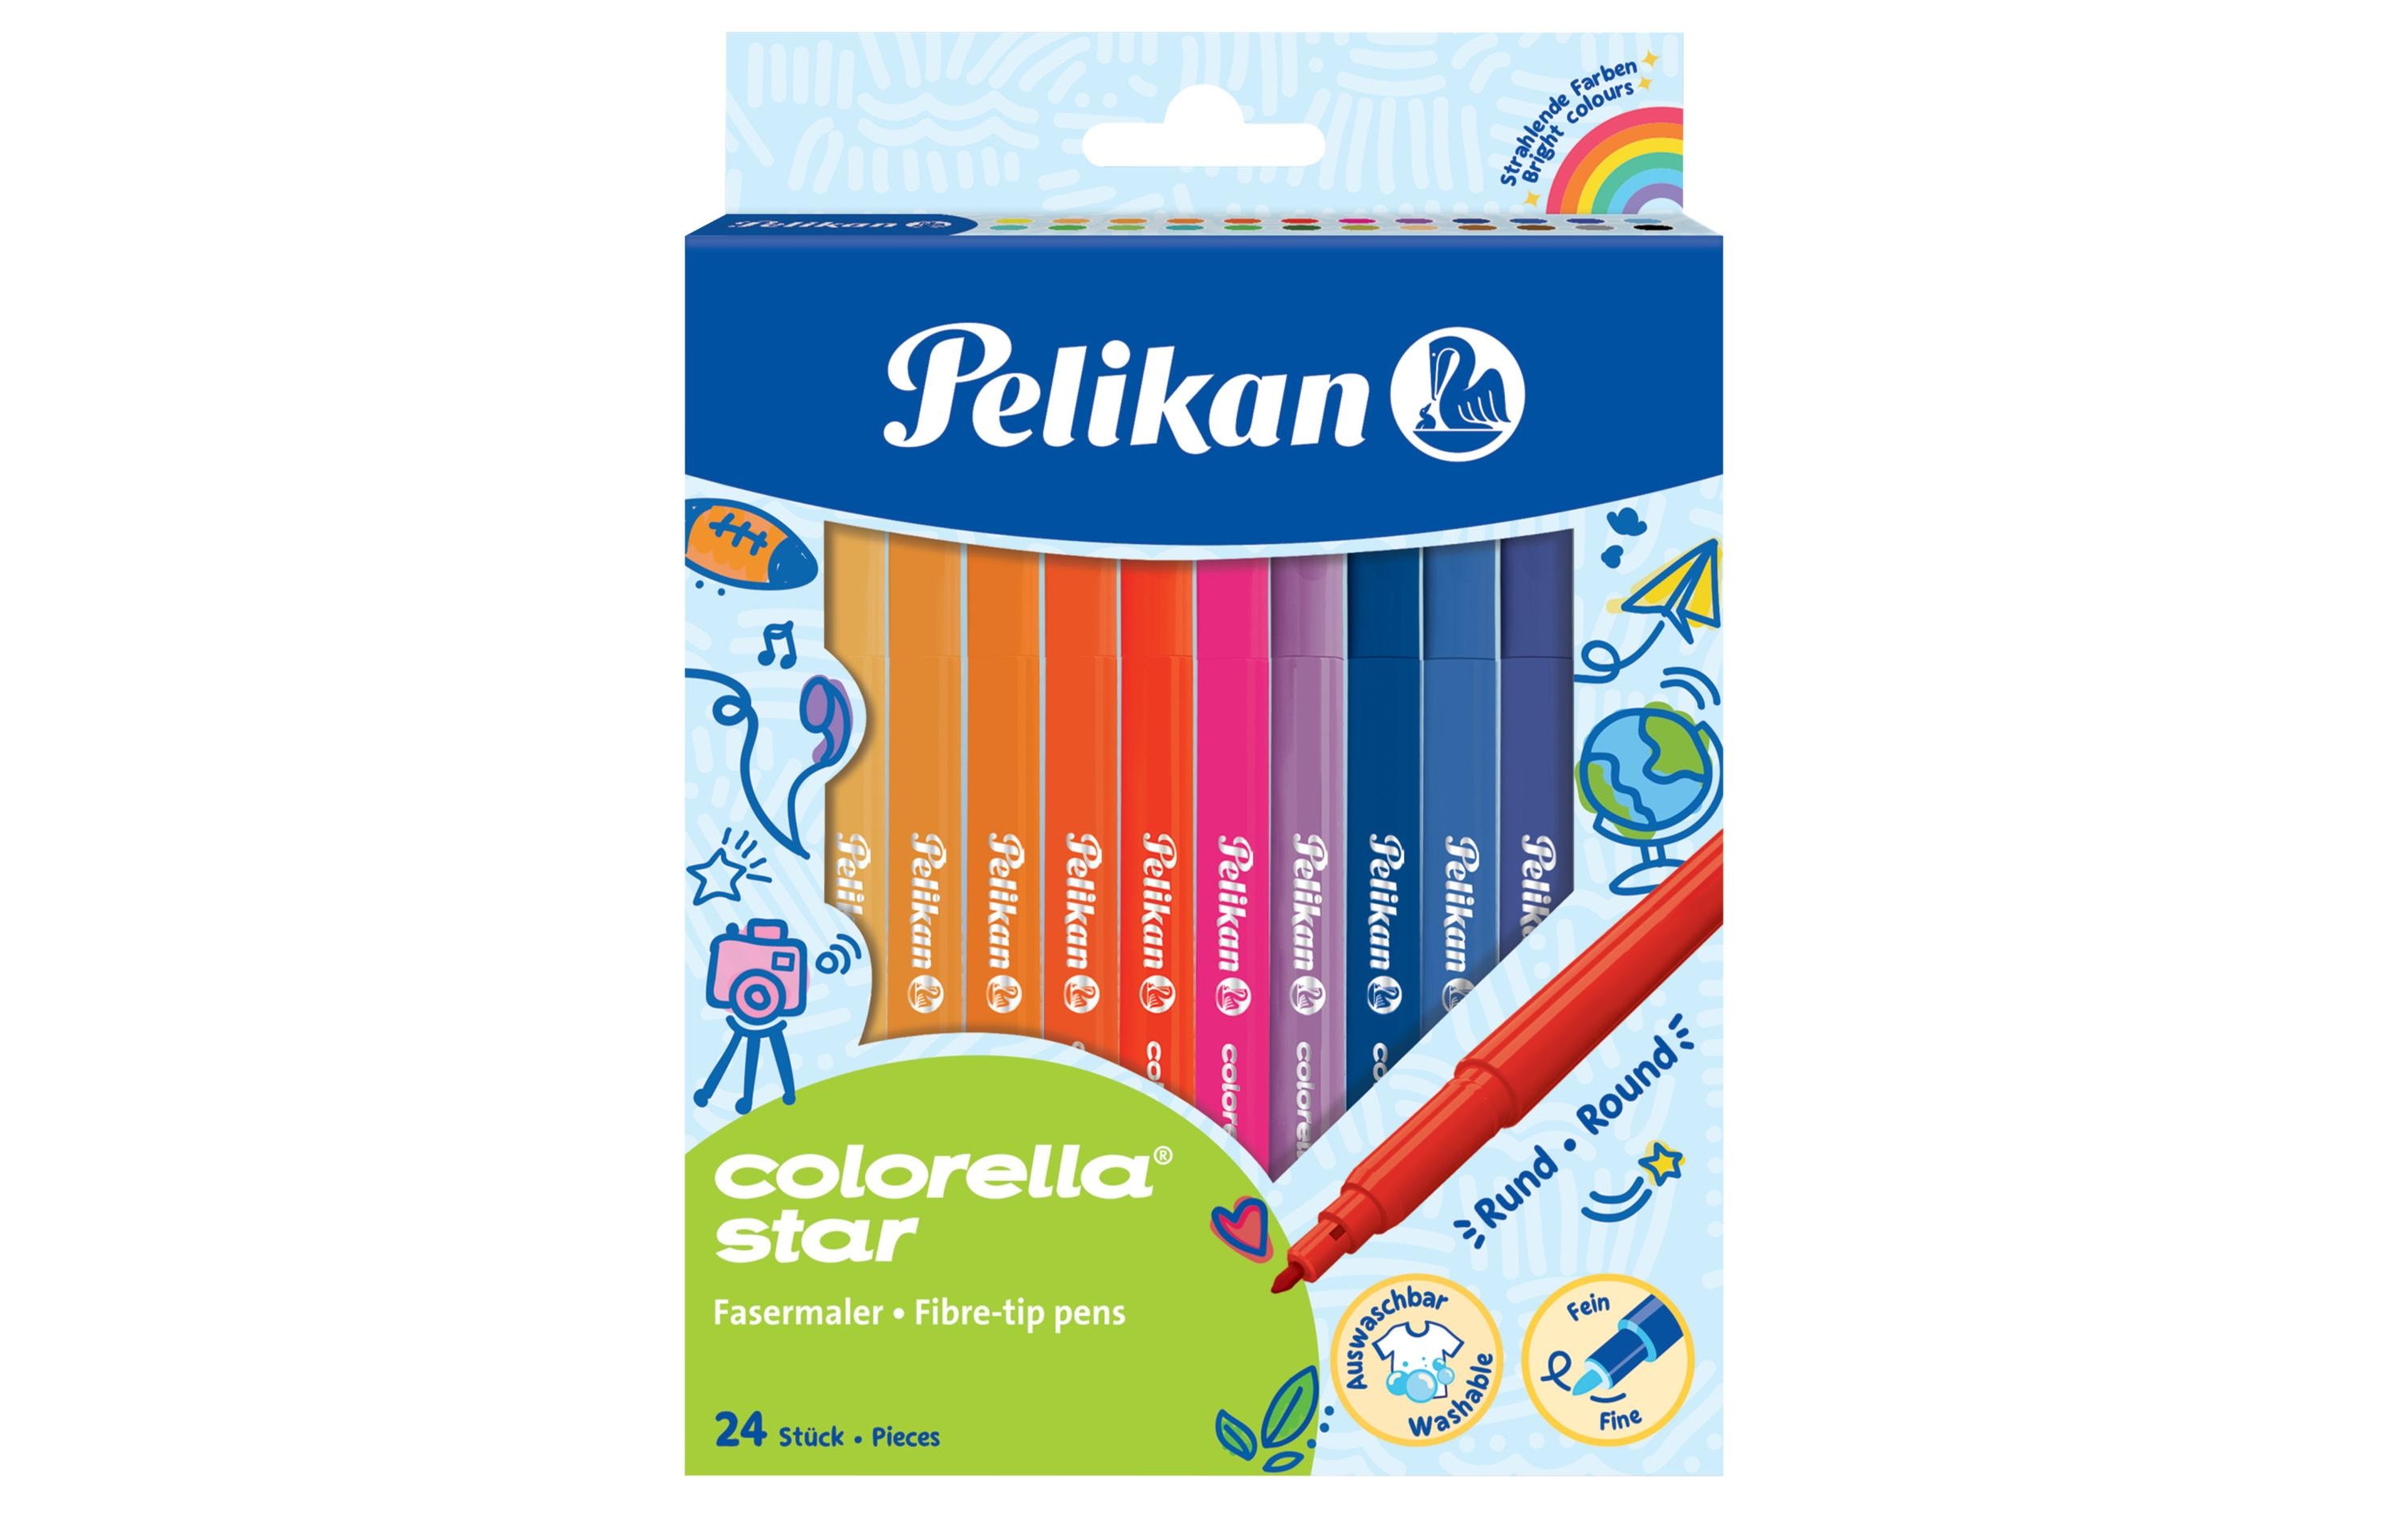 Pelikan Fasermaler Colorella Star C302 24 Farben, Hängefaltschachtel